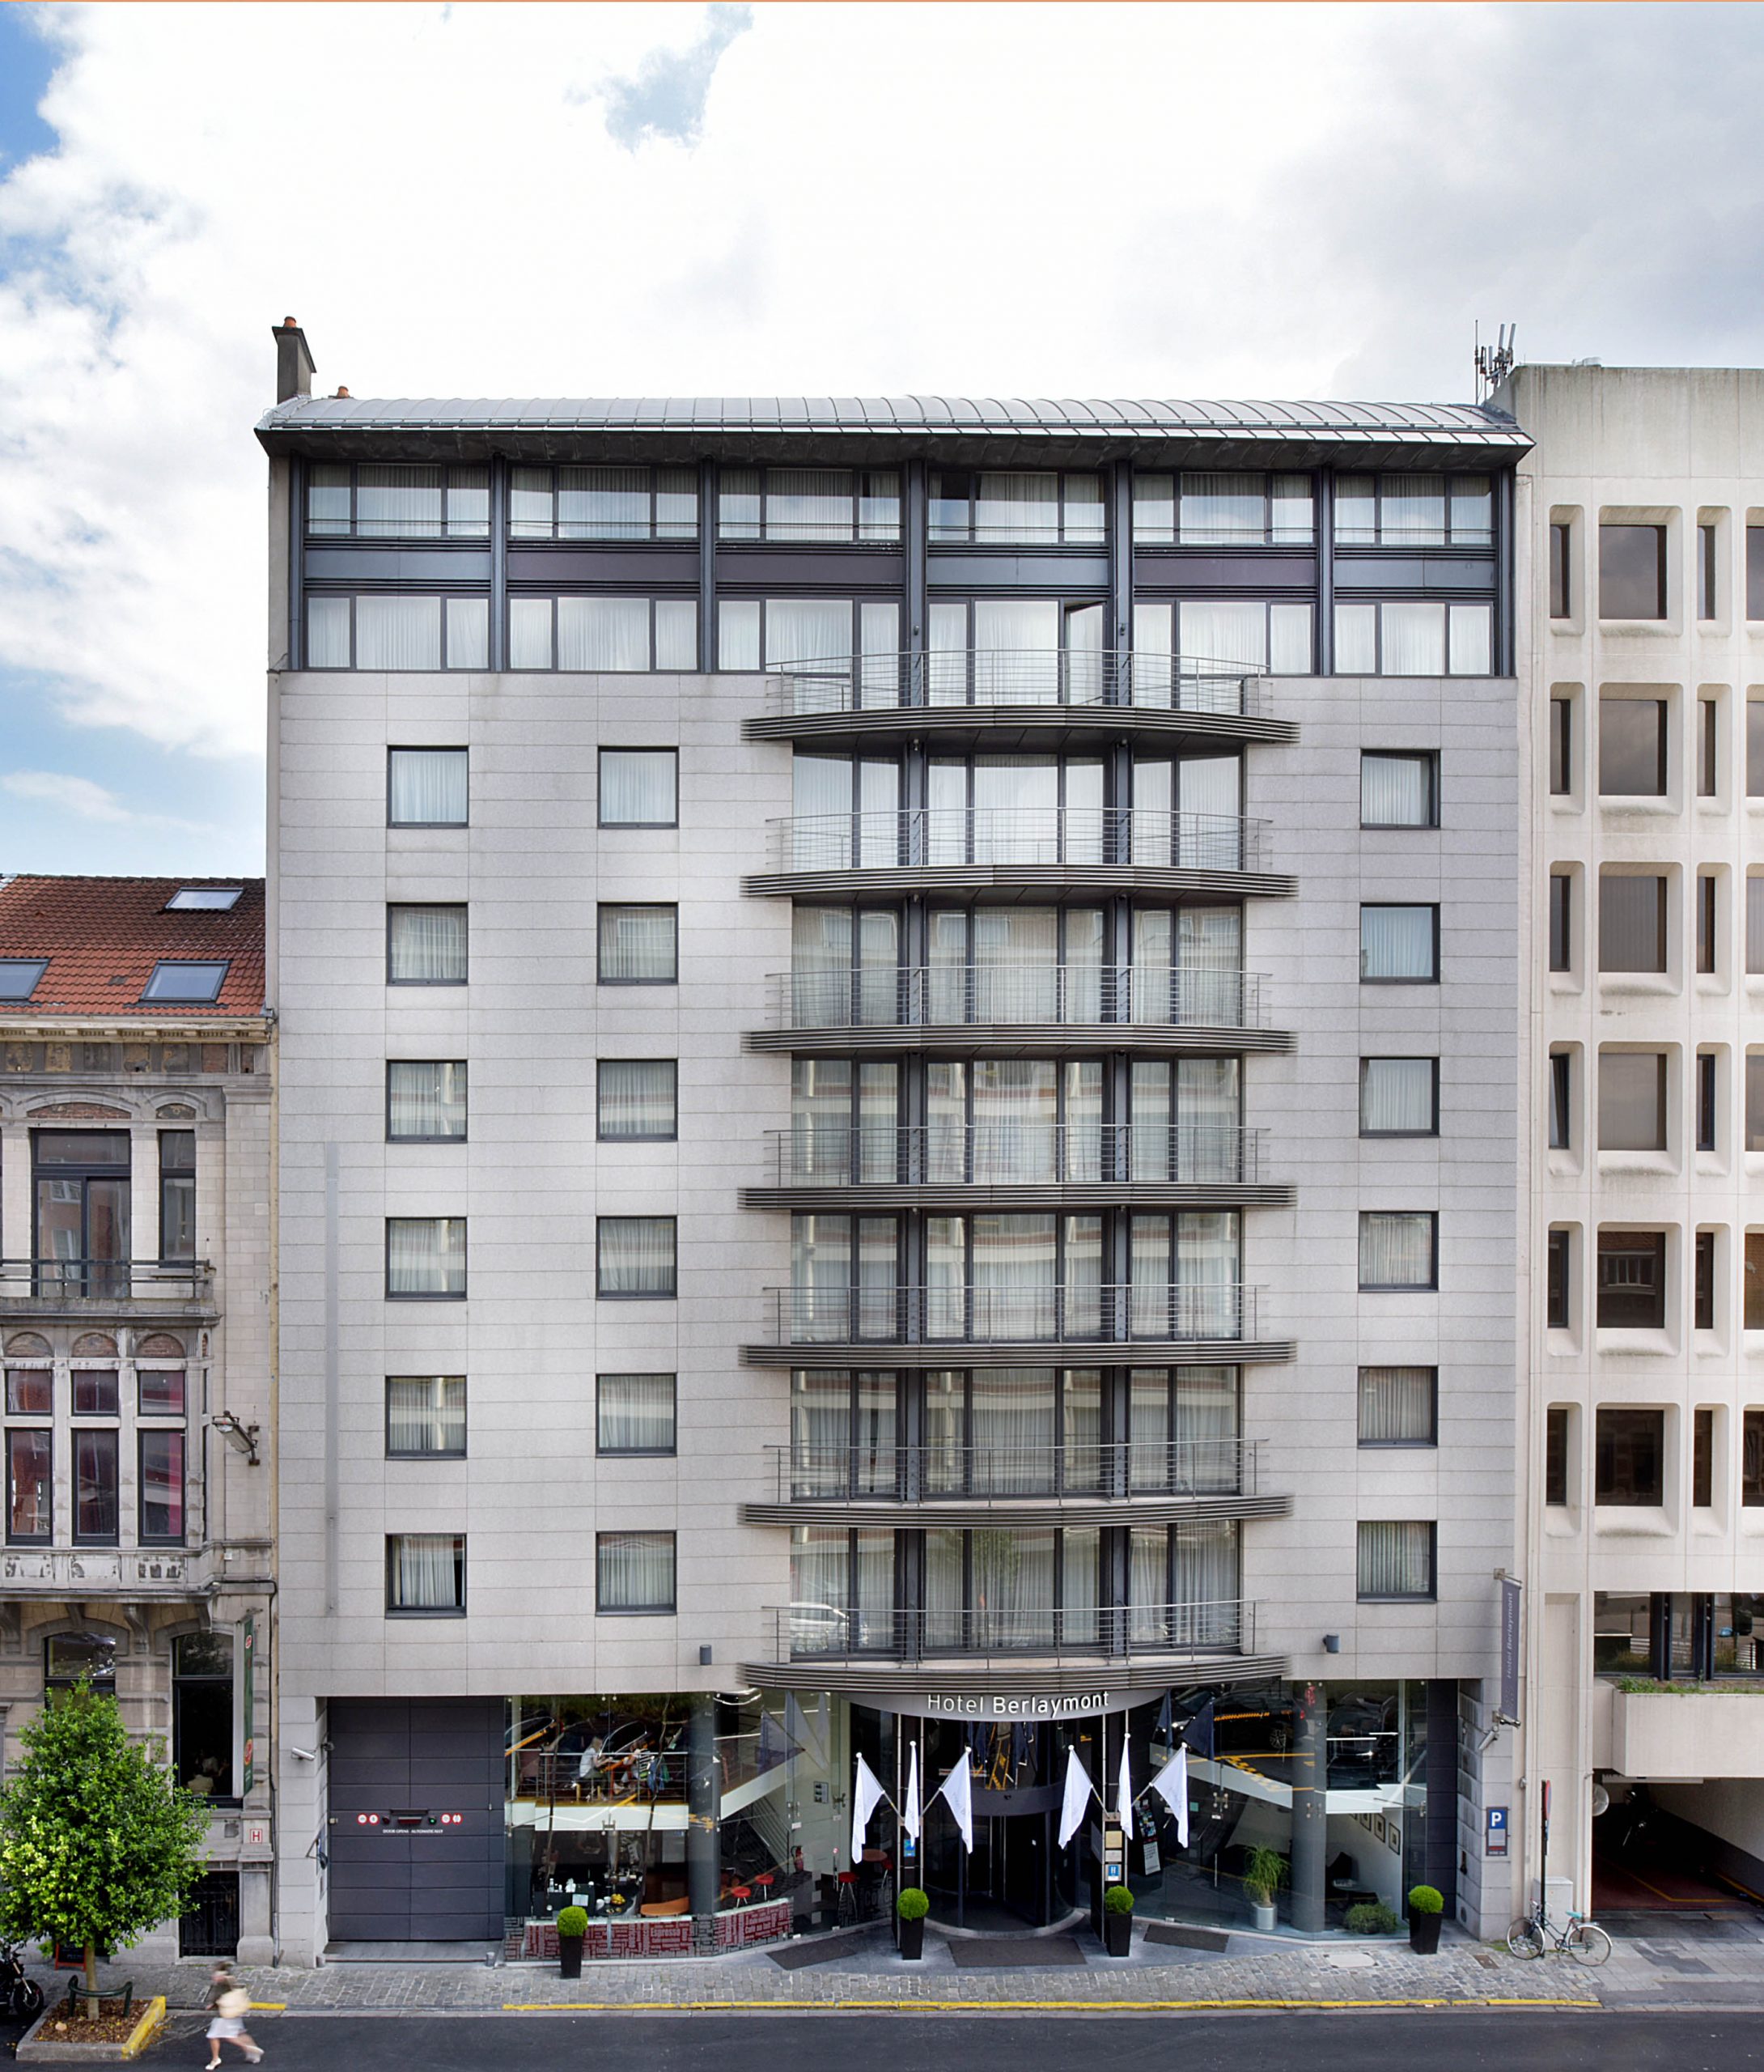 Pandox confía en NH Hotel Group para operar dos hoteles emblemáticos de Bruselas